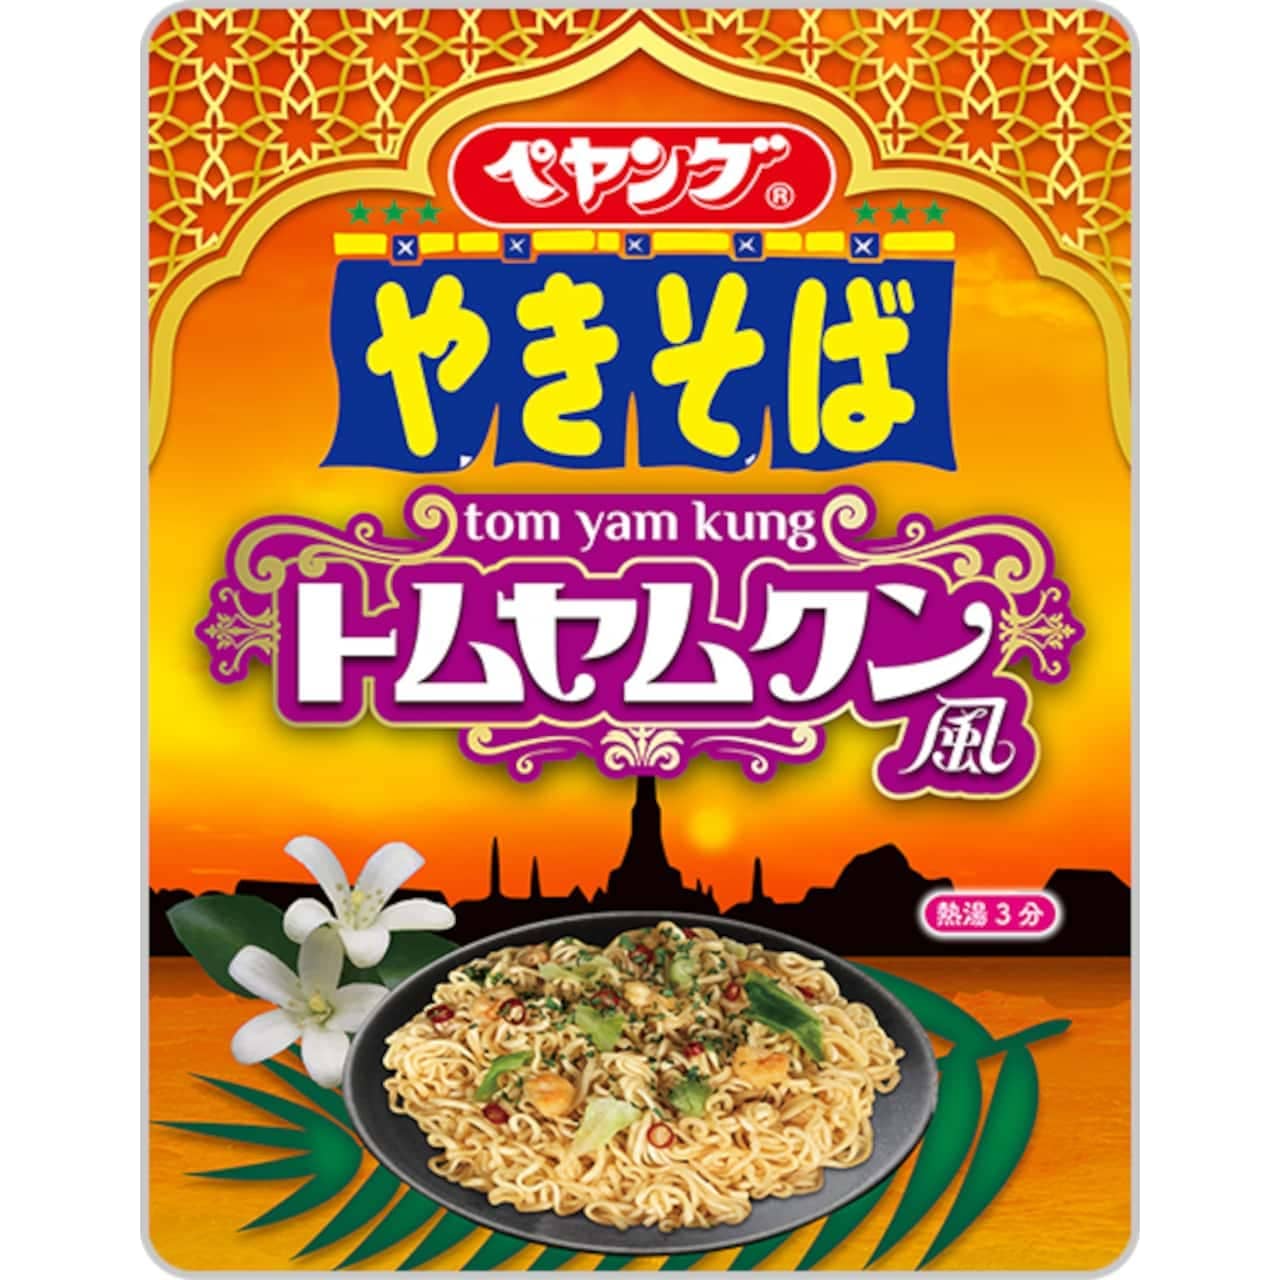 Maruka Foods "Peyoung Tom Yam Kung Style Yakisoba